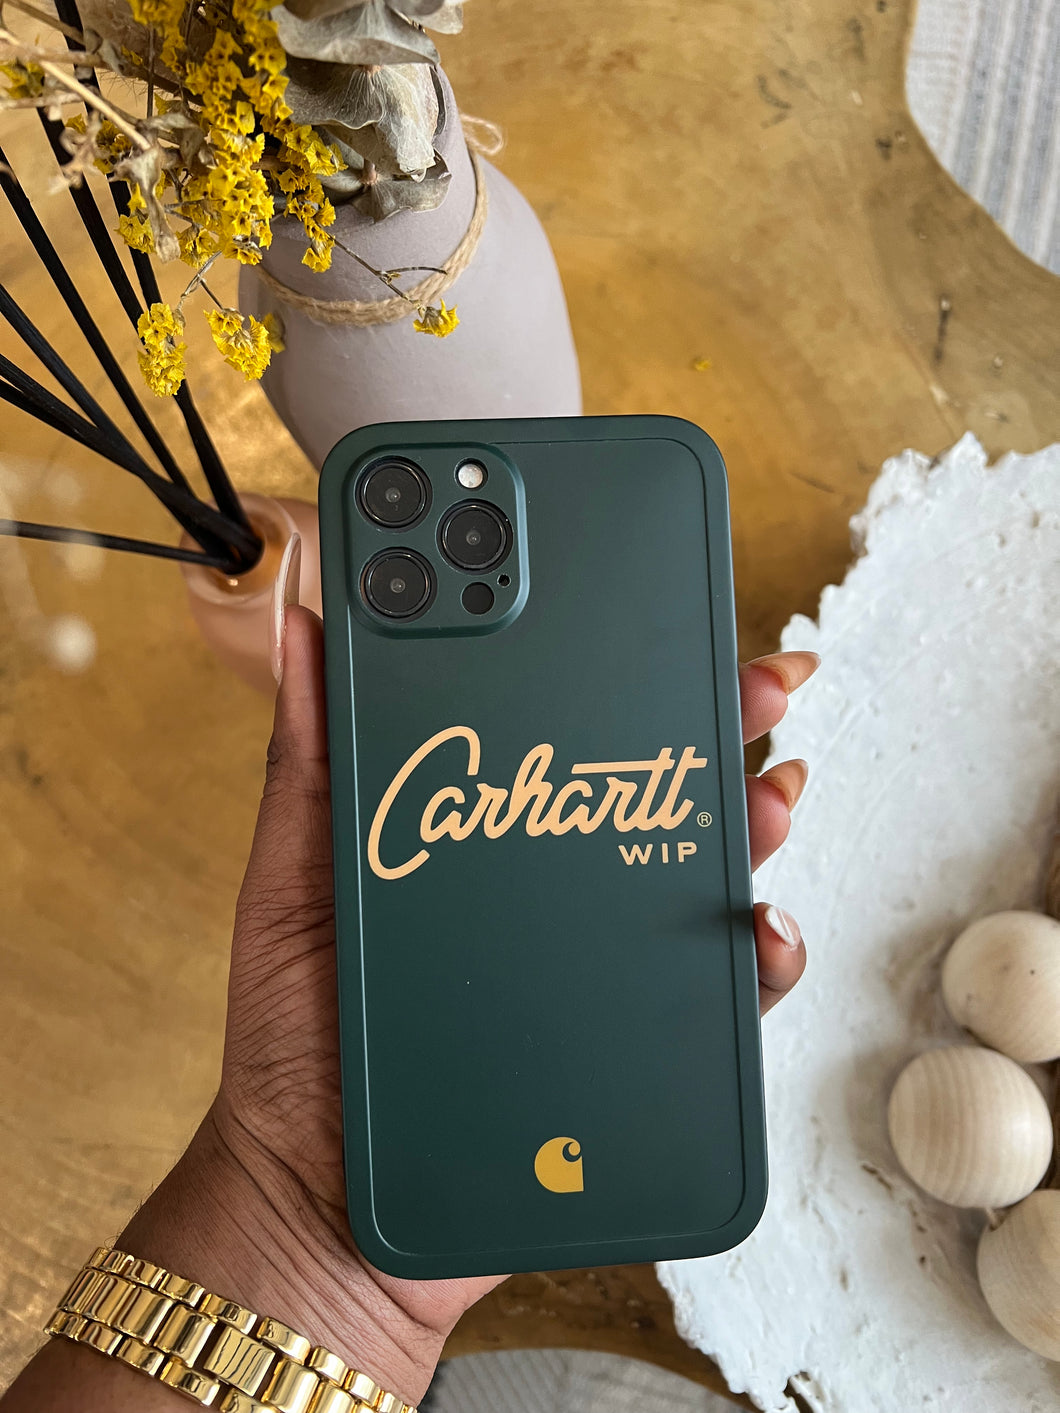 Carhartt phone case